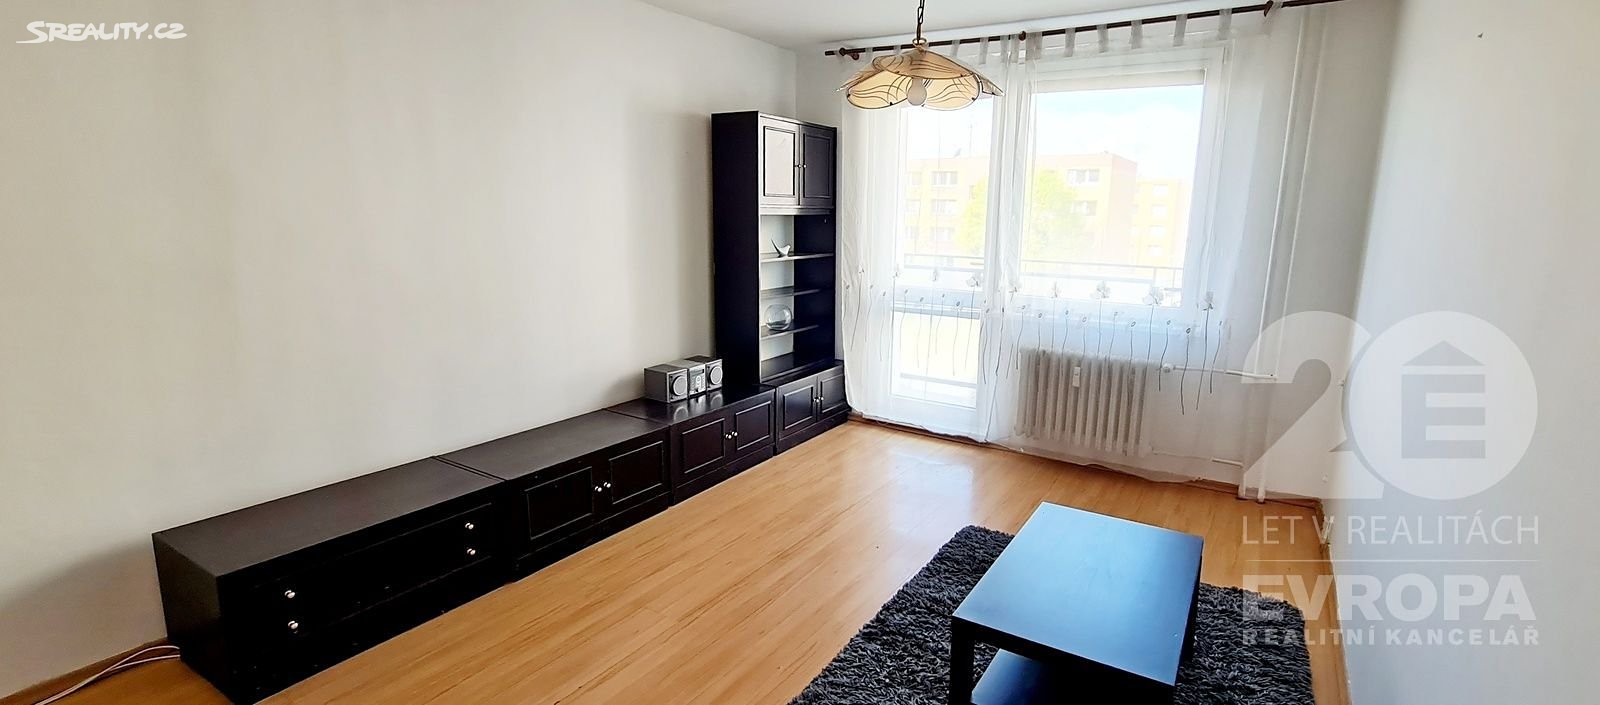 Pronájem bytu 3+1 71 m², Schweitzerova, Olomouc - Povel